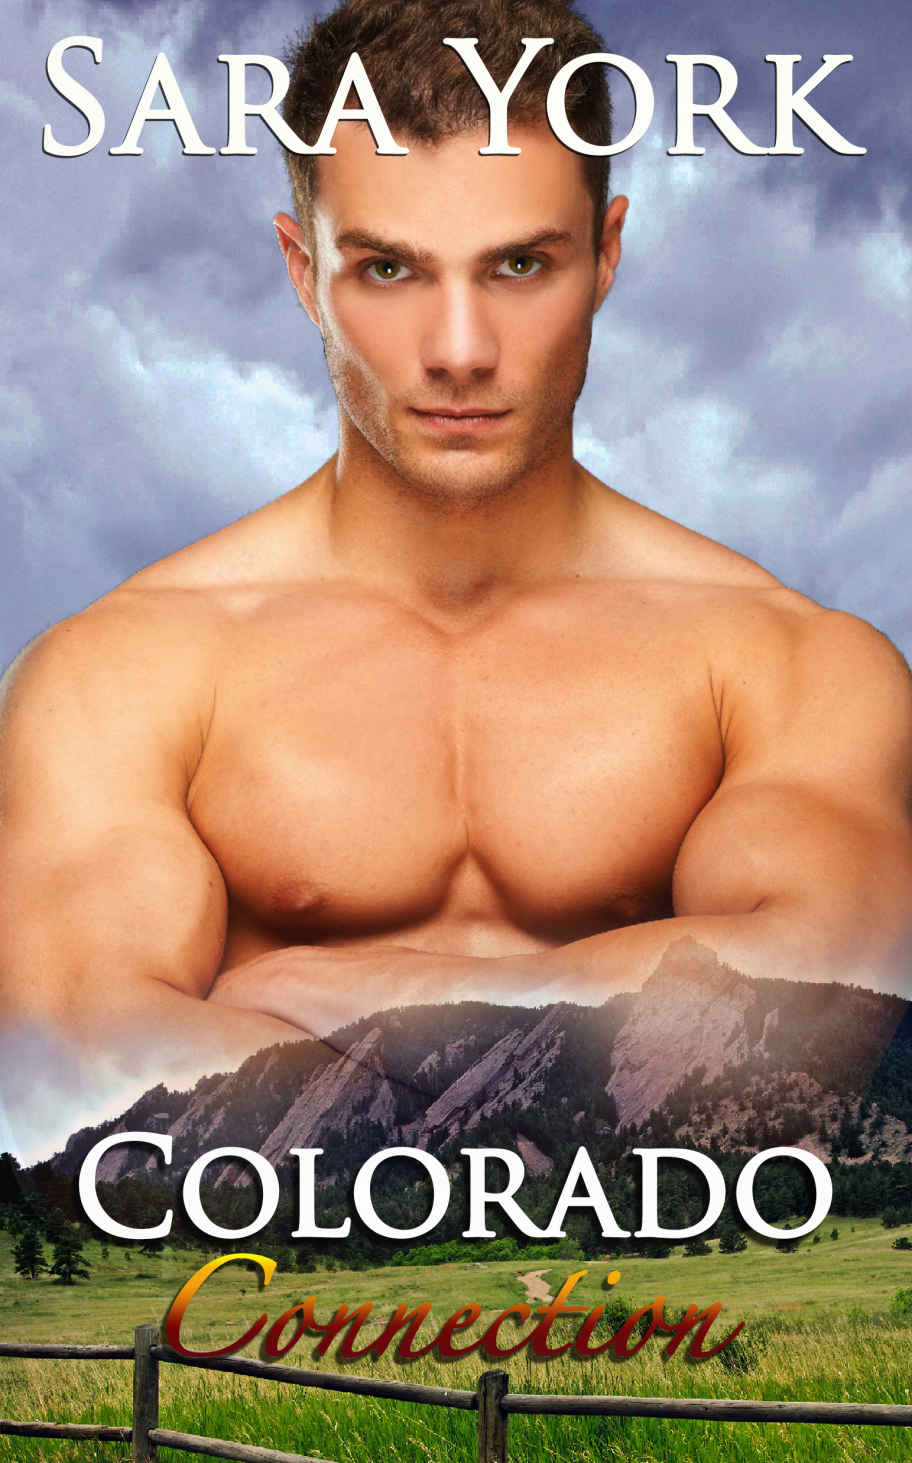 Colorado Connection (Colorado Heart Book 6) by Sara York